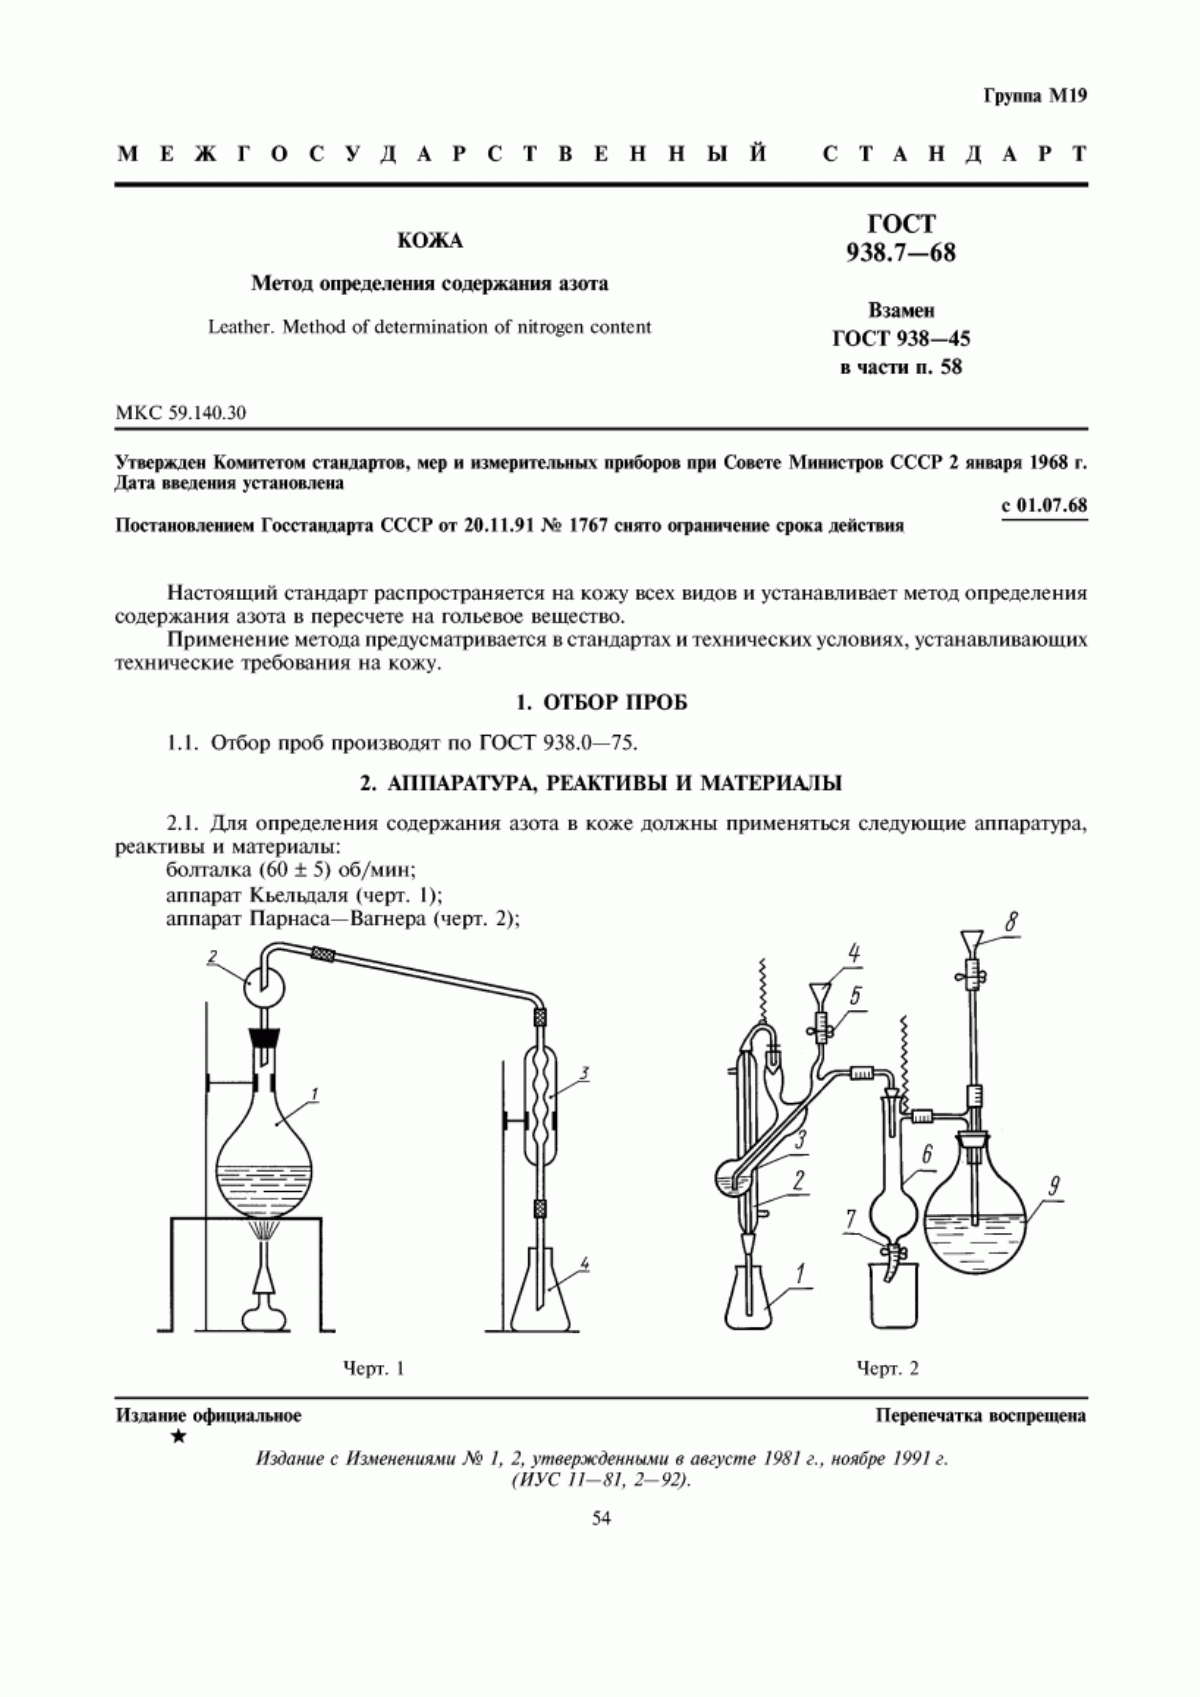 ГОСТ 938.7-68 Кожа. Метод определения содержания азота